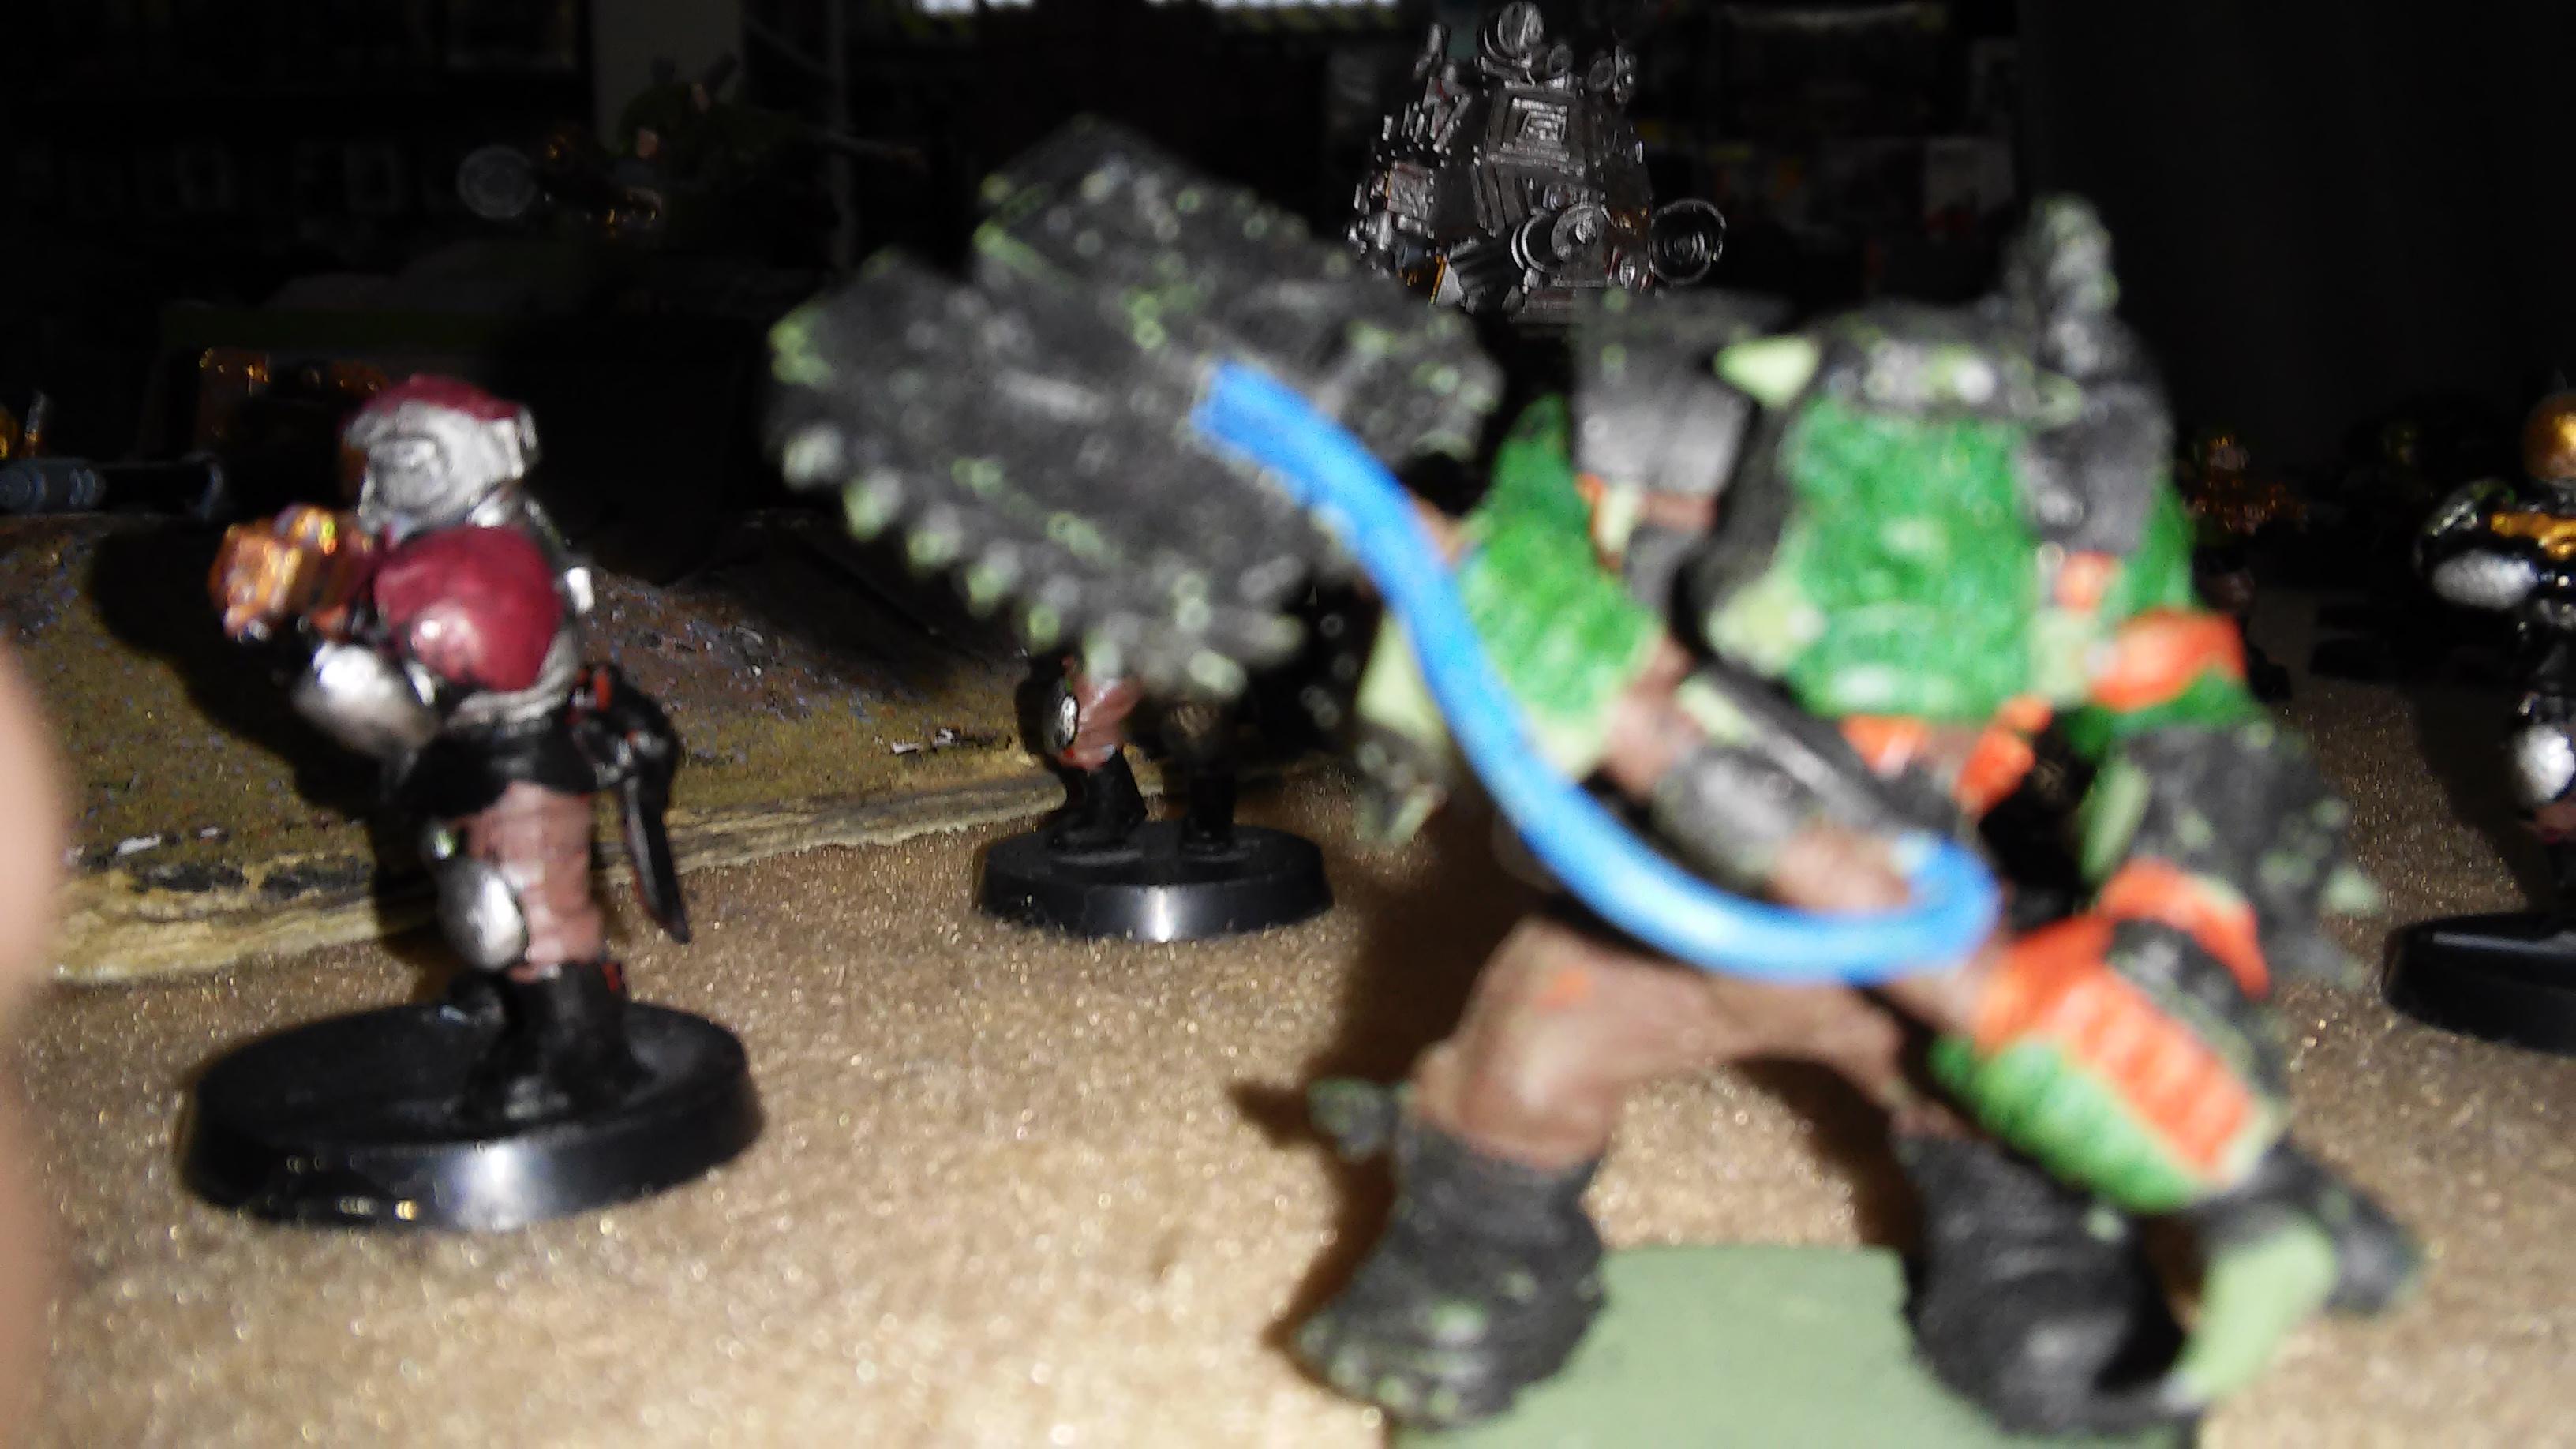 Ork Nob seen fighting alongside Guardsmen